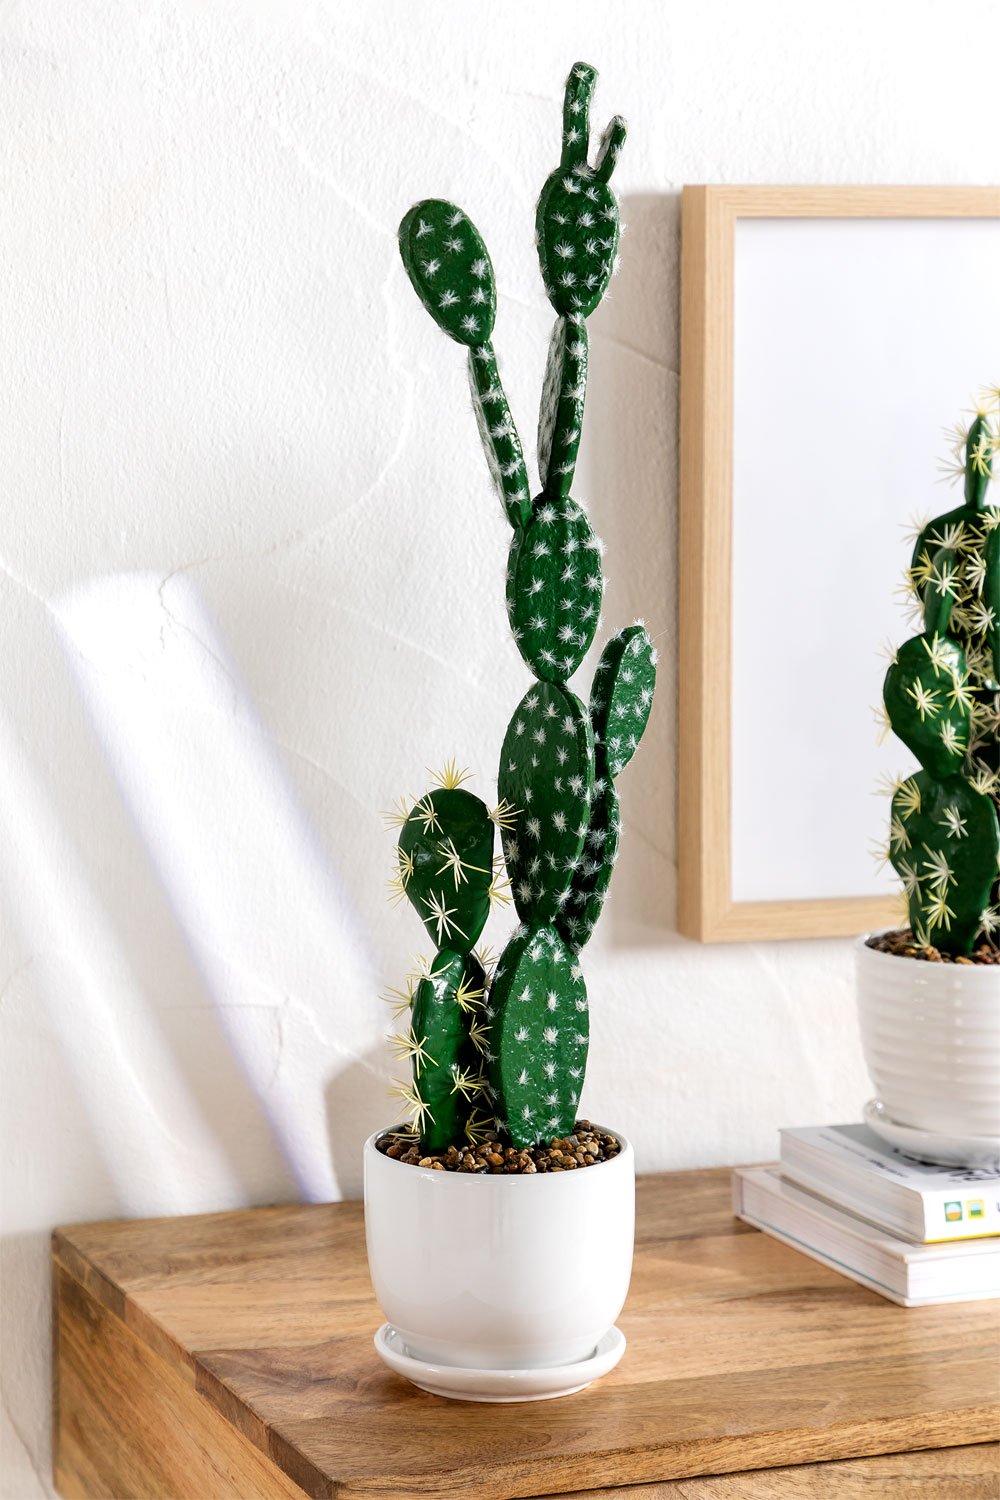 Cactus artificiale  Opuntia 60 cm, immagine della galleria 1